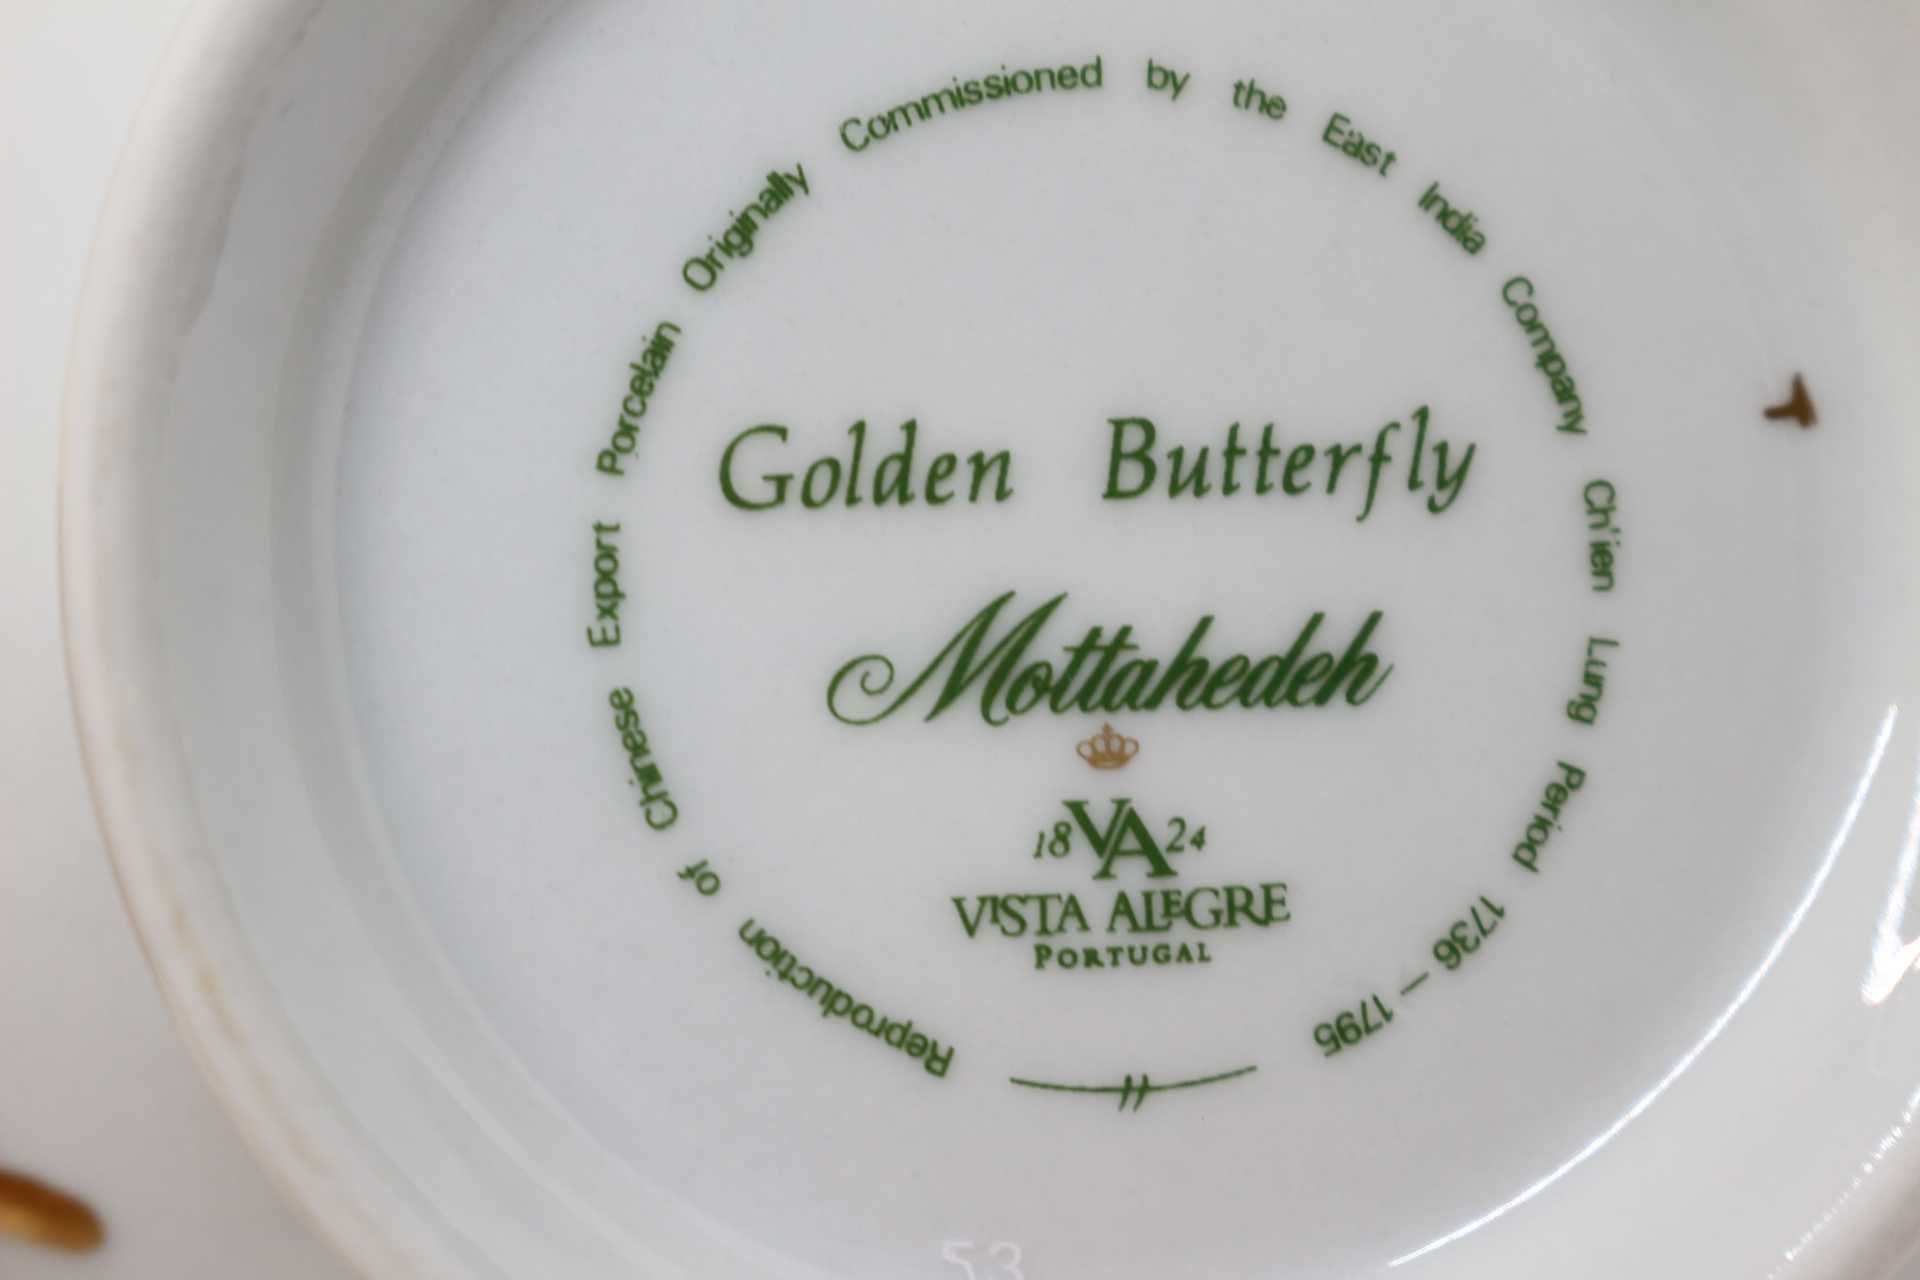 Grande Cremeira Coleção Golden Butterfly Mottahedeh Vista Alegre 1997